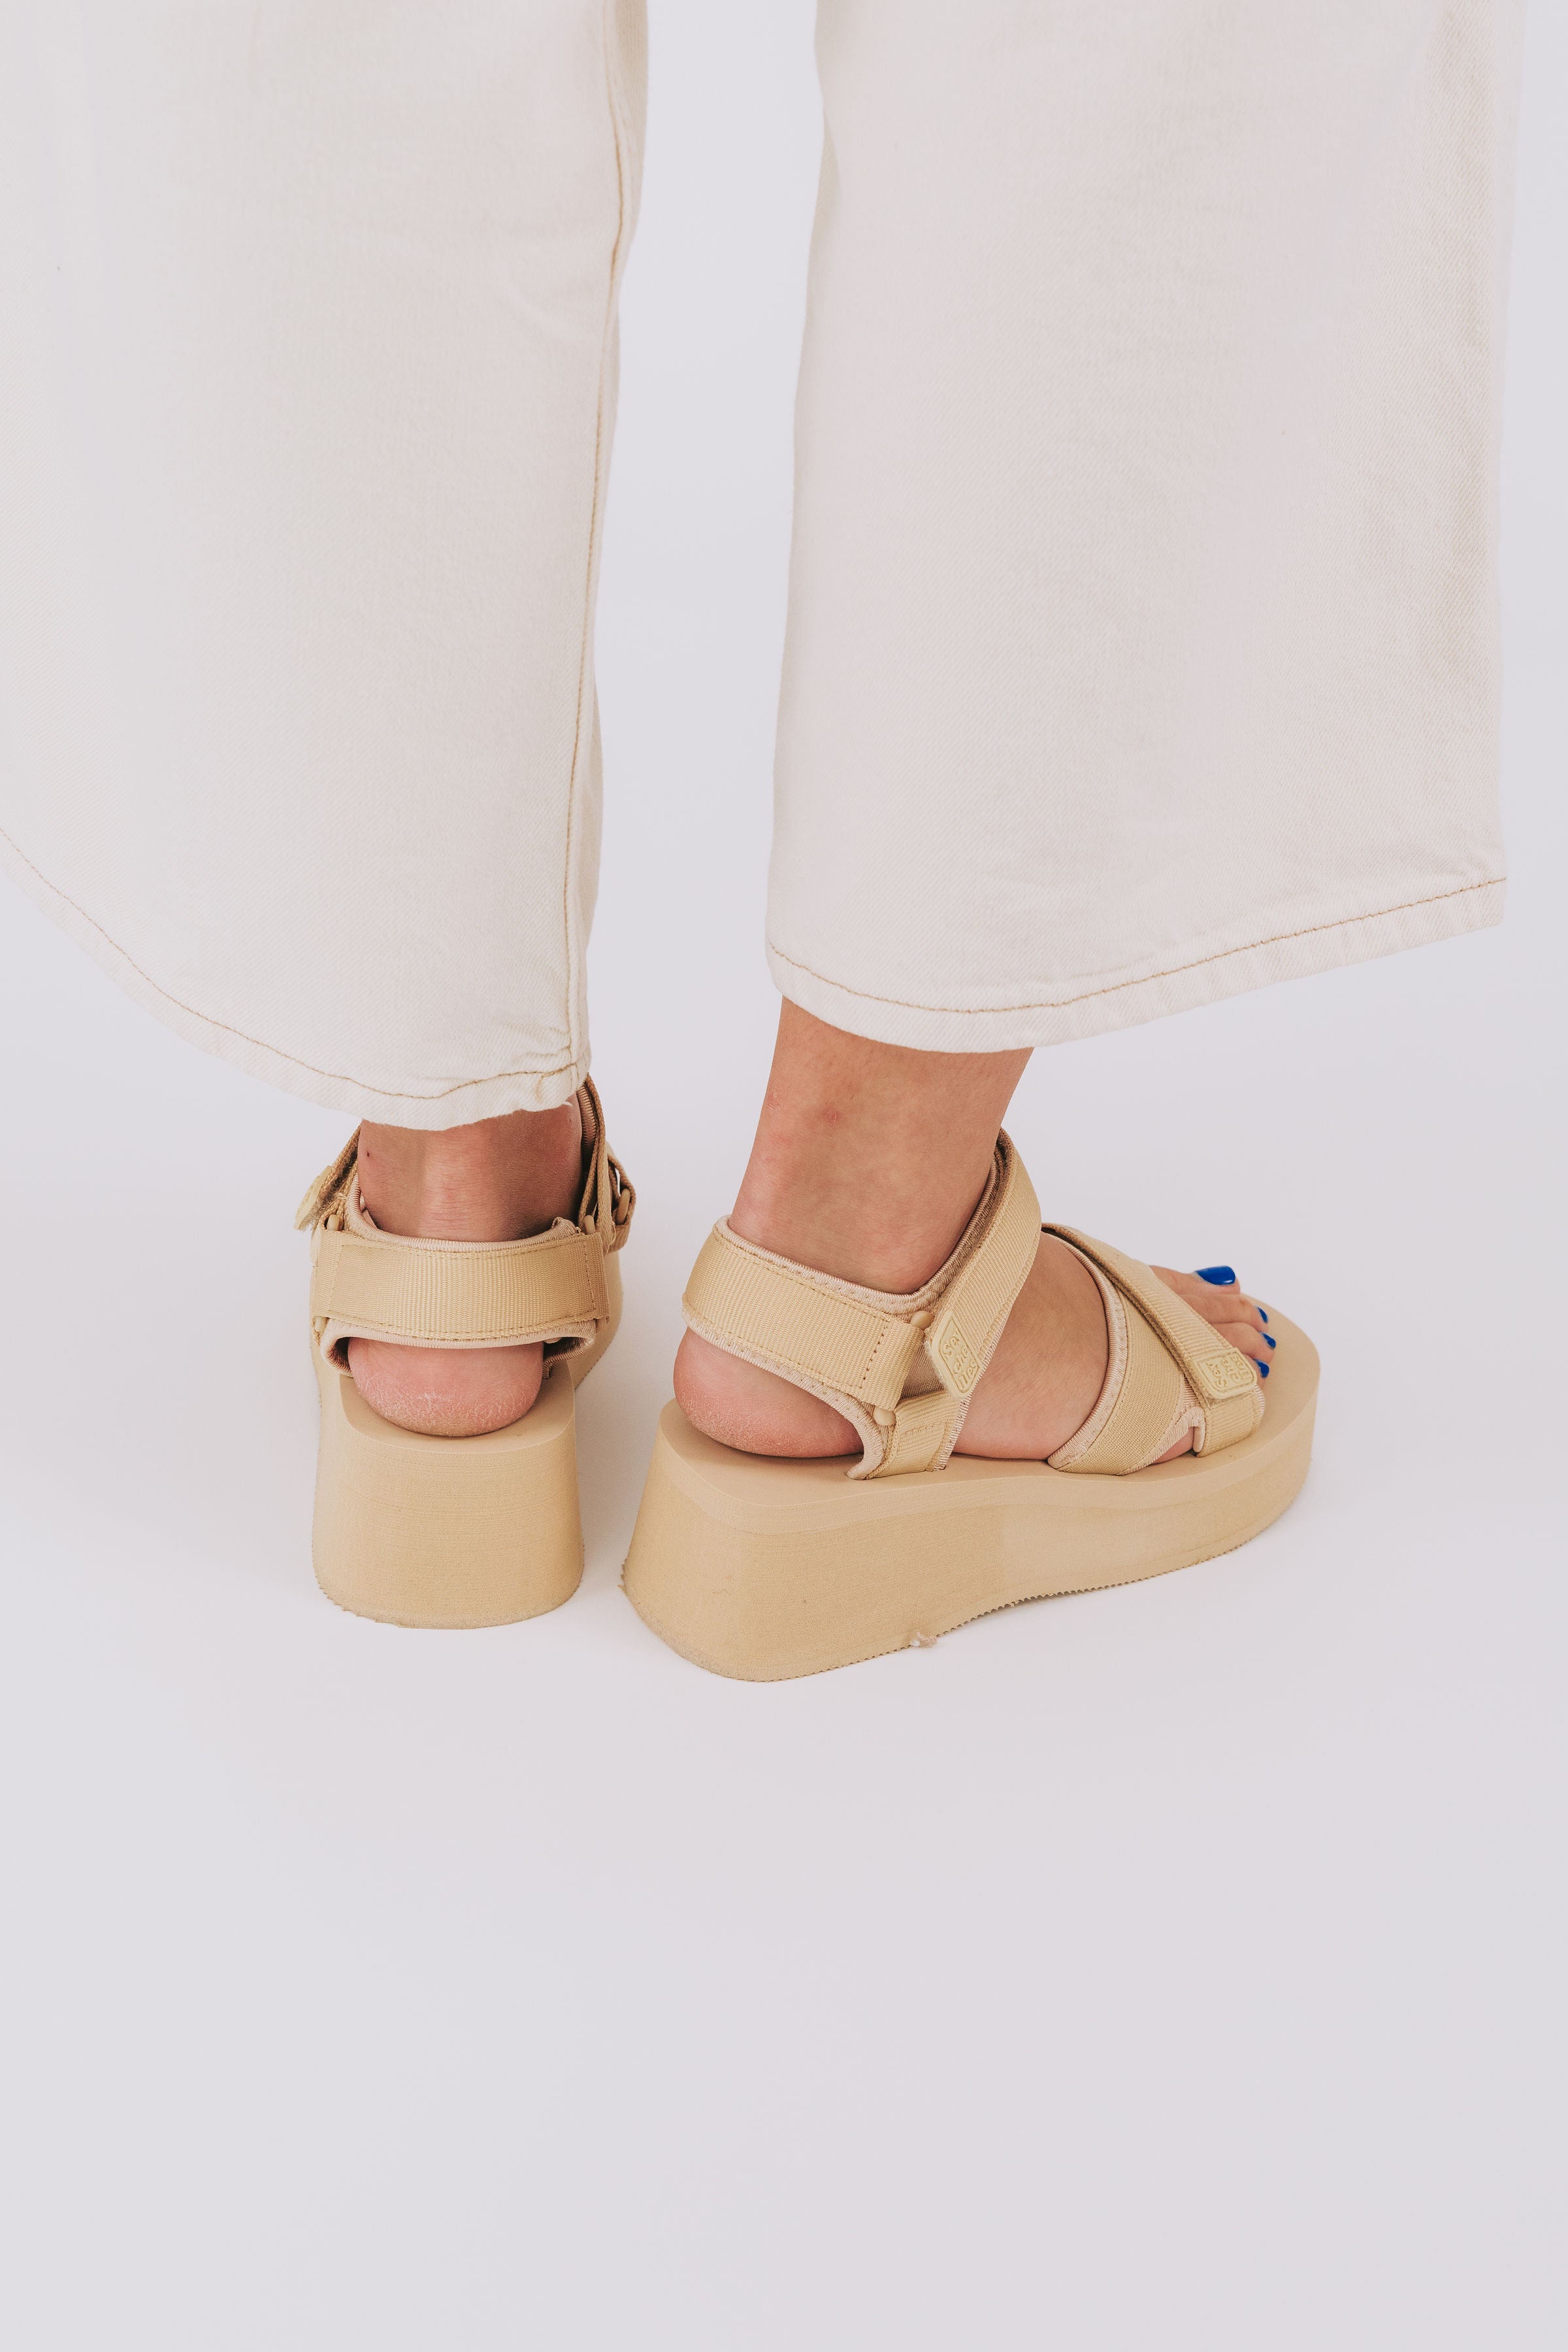 SEYCHELLES - Serenade Platform Sandal